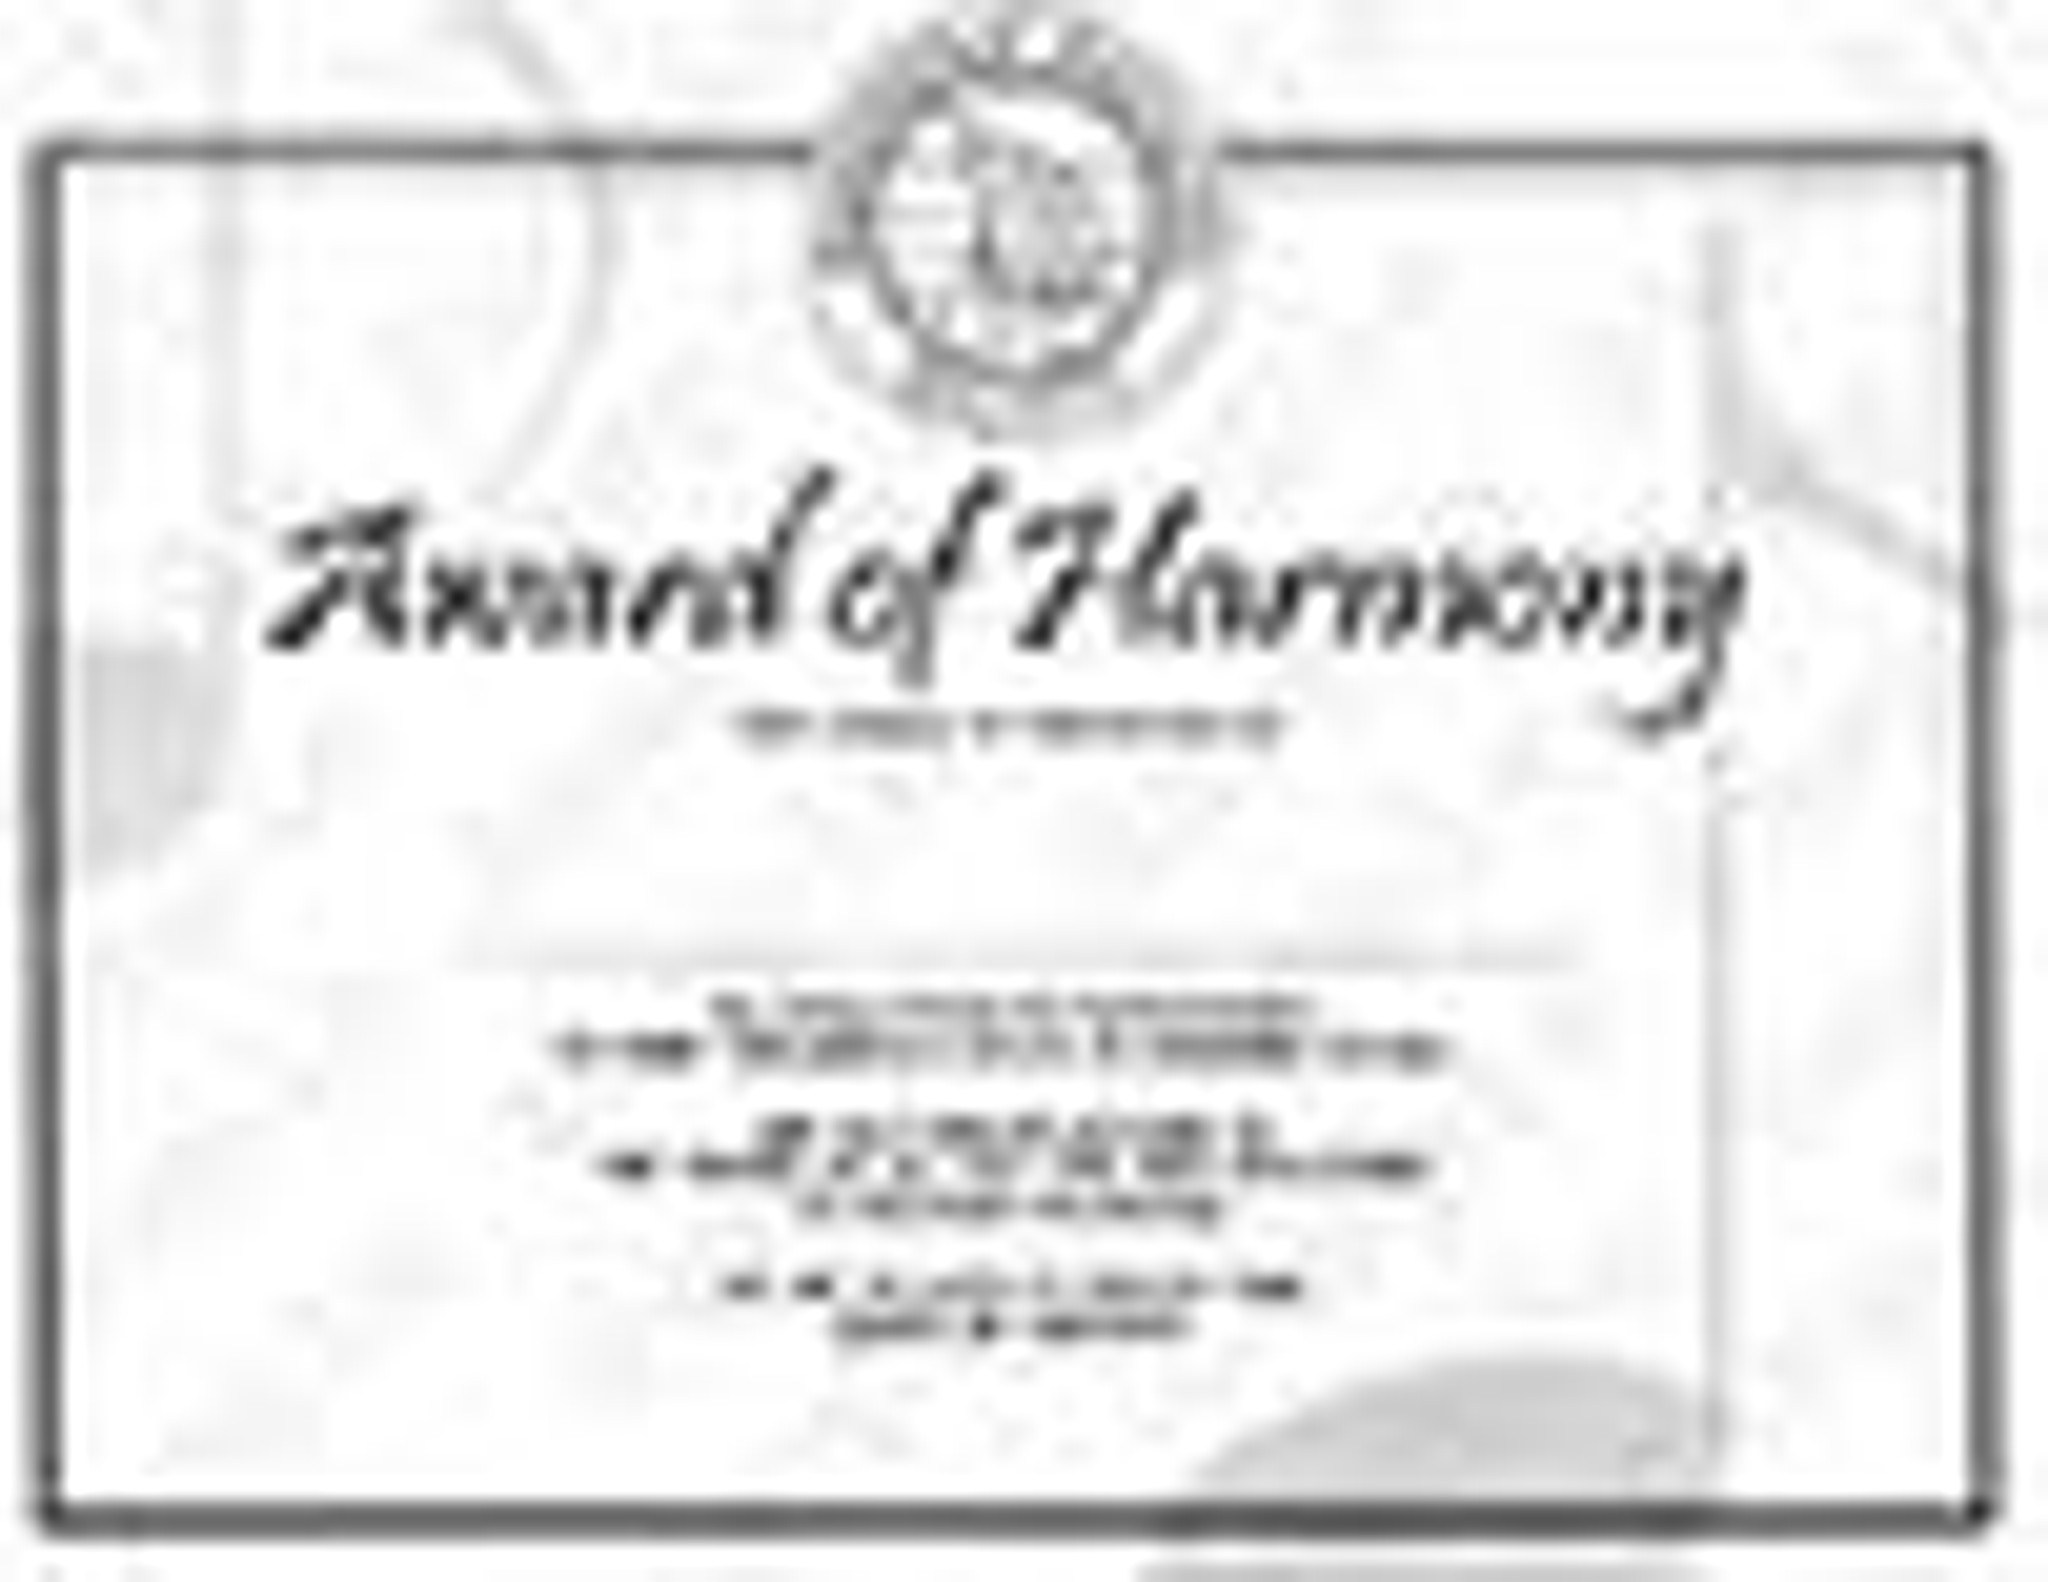 Award of Harmony Certificate - Barbershop Harmony Society